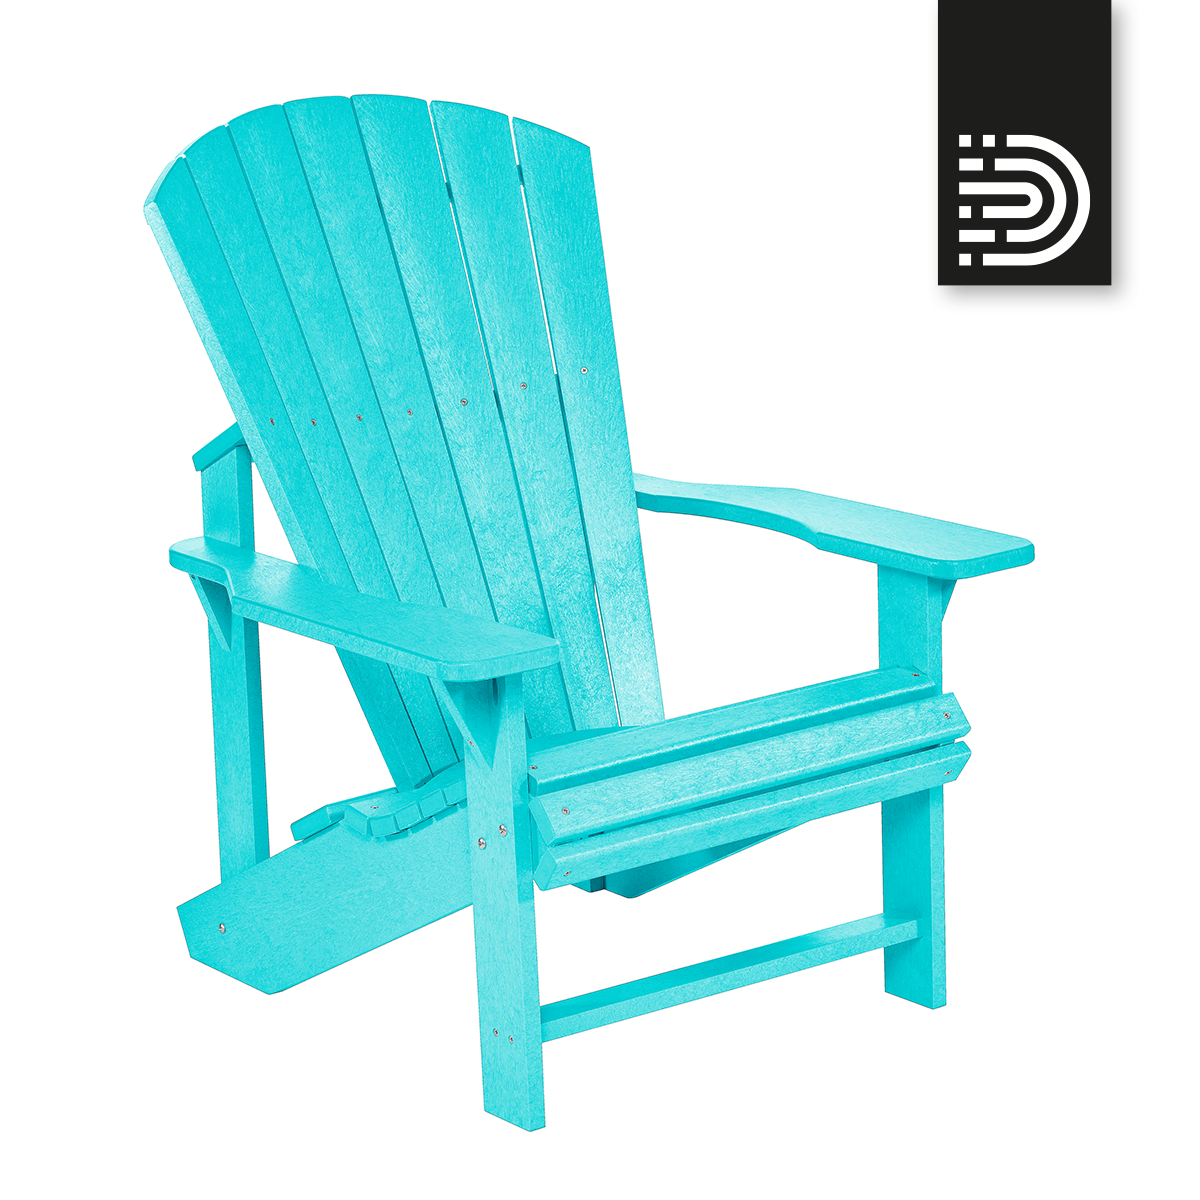  C01 Classic Adirondack Chair - türkis 09